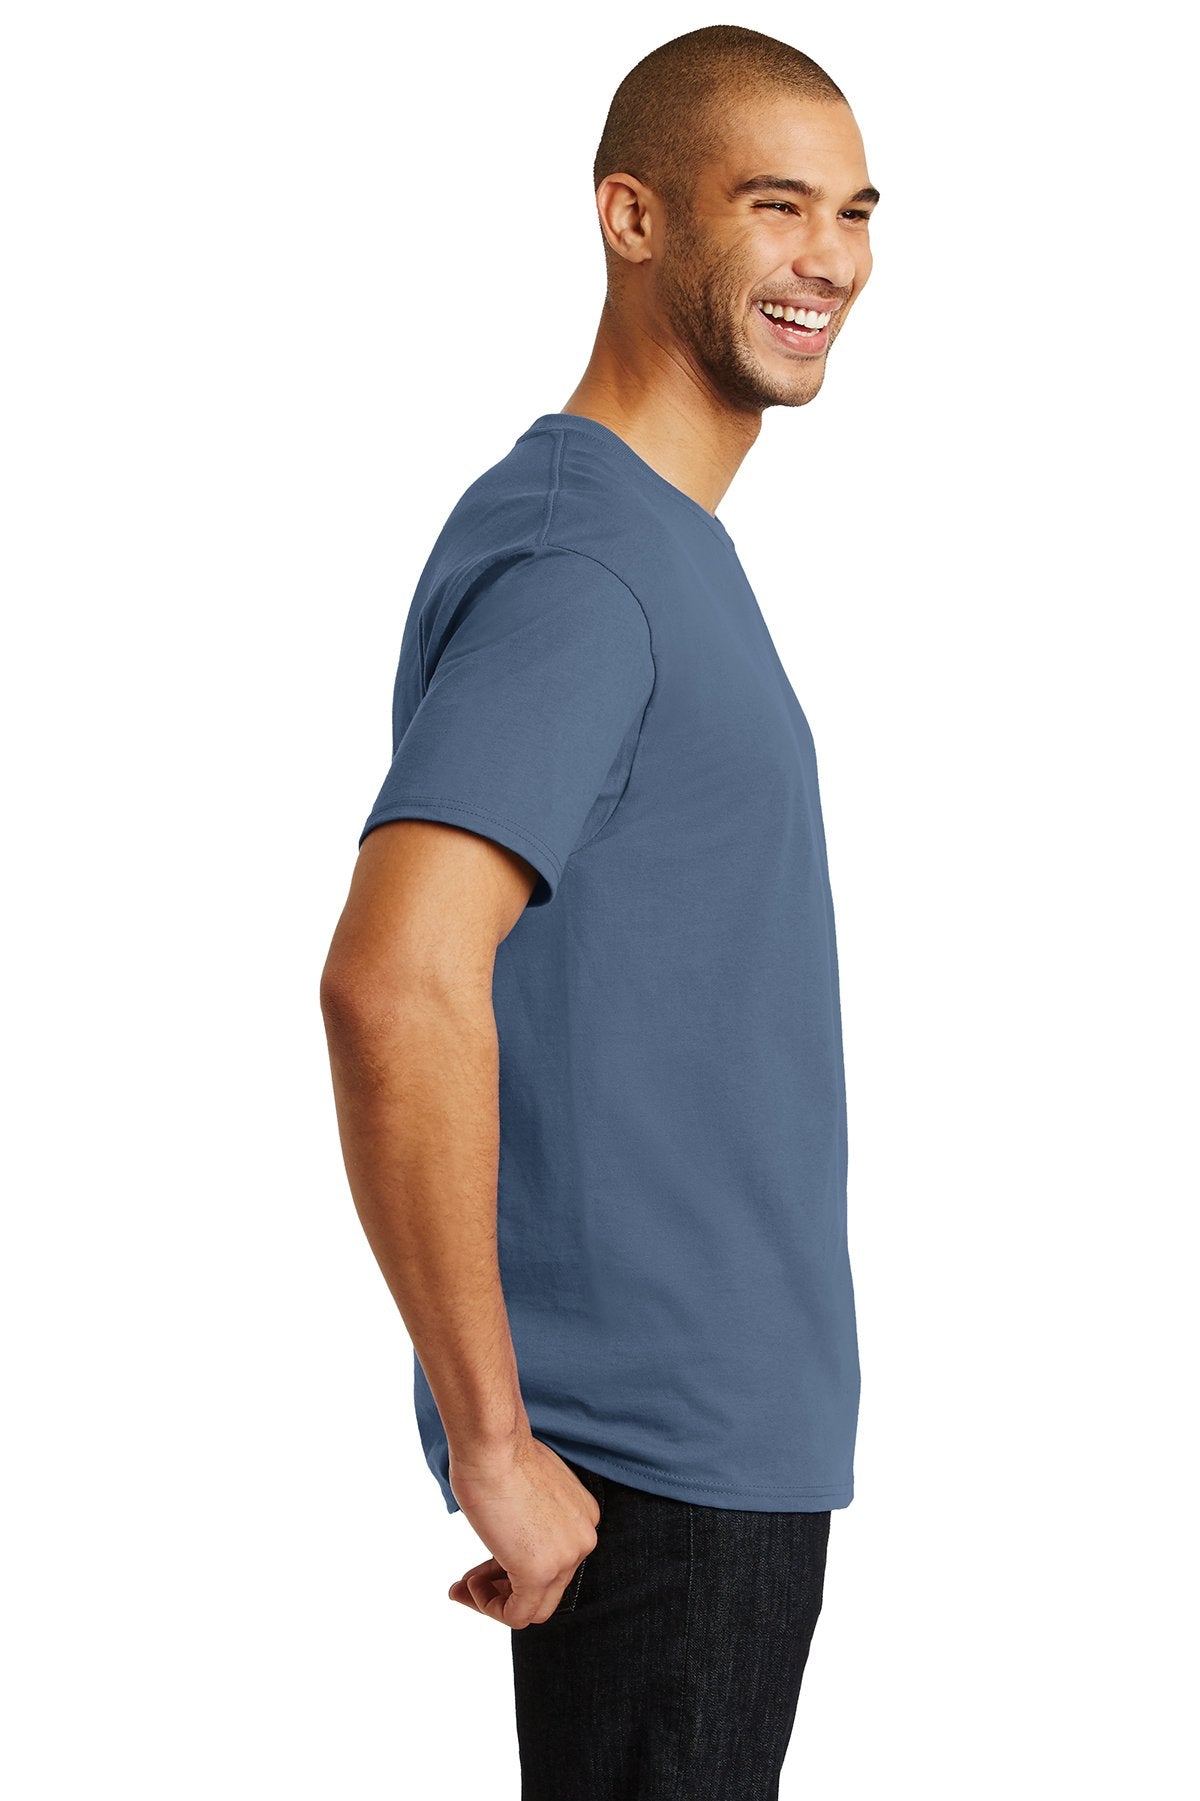 hanes tagless cotton t shirt 5250 denim blue